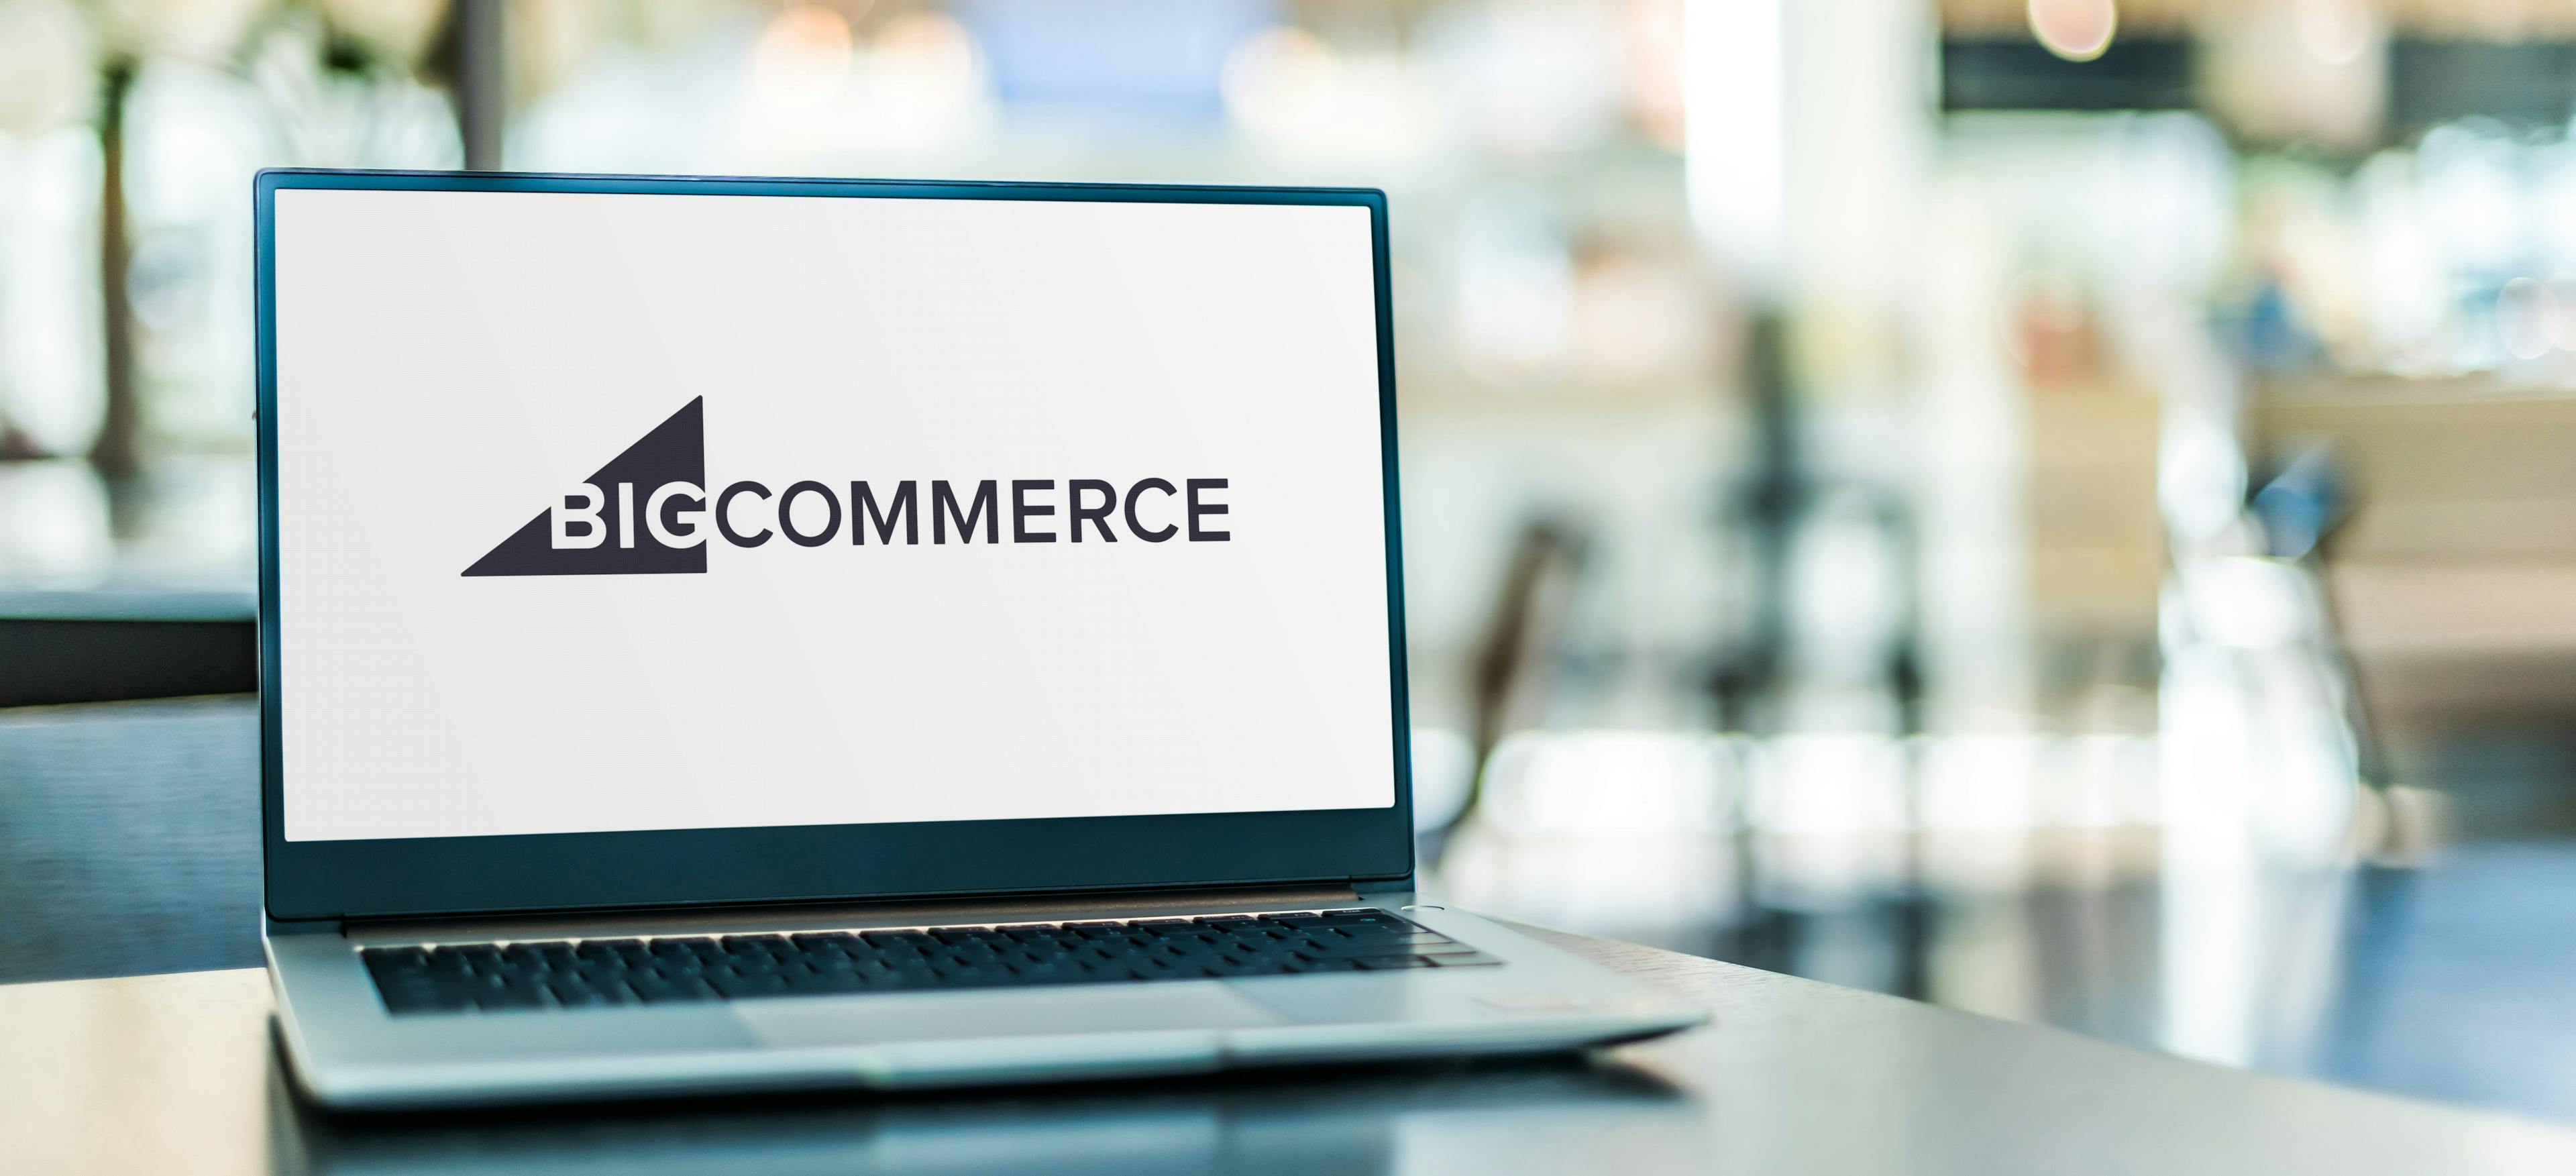 image that represent the e-commerce company BigCommerce 